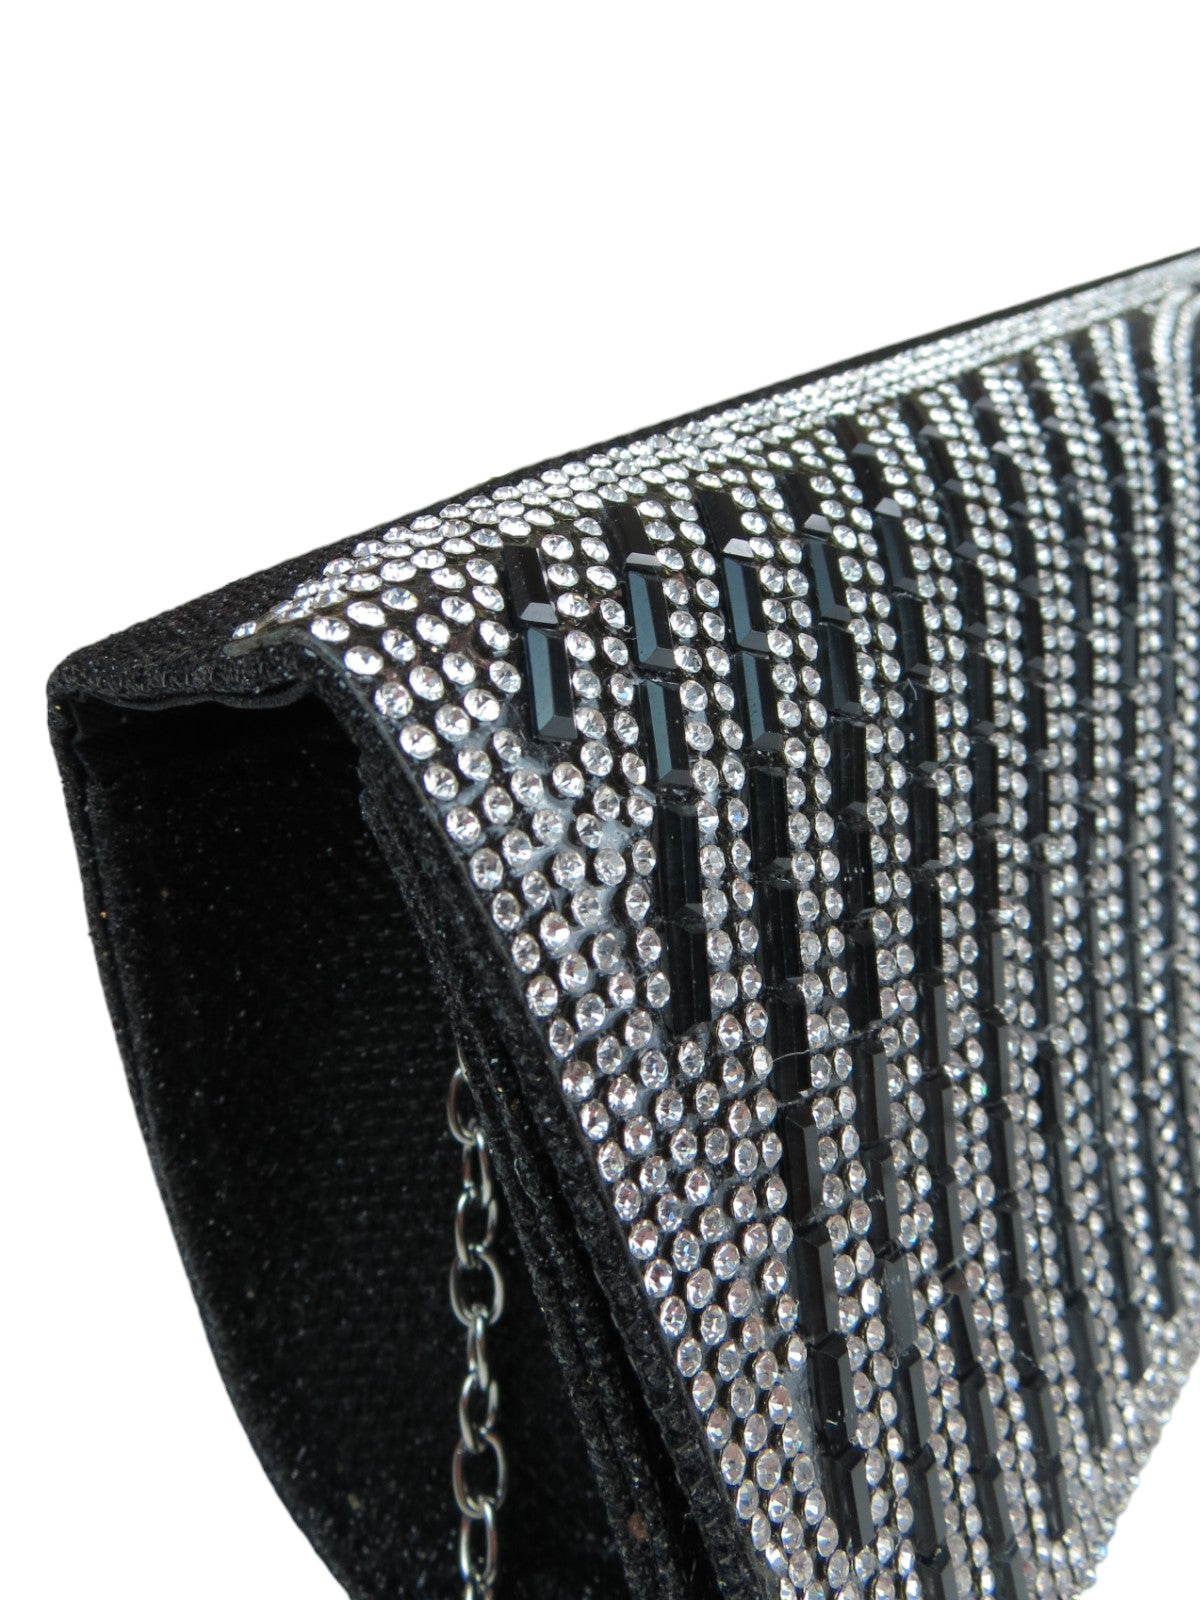 Oval Pattern Diamante Clutch Bag Black